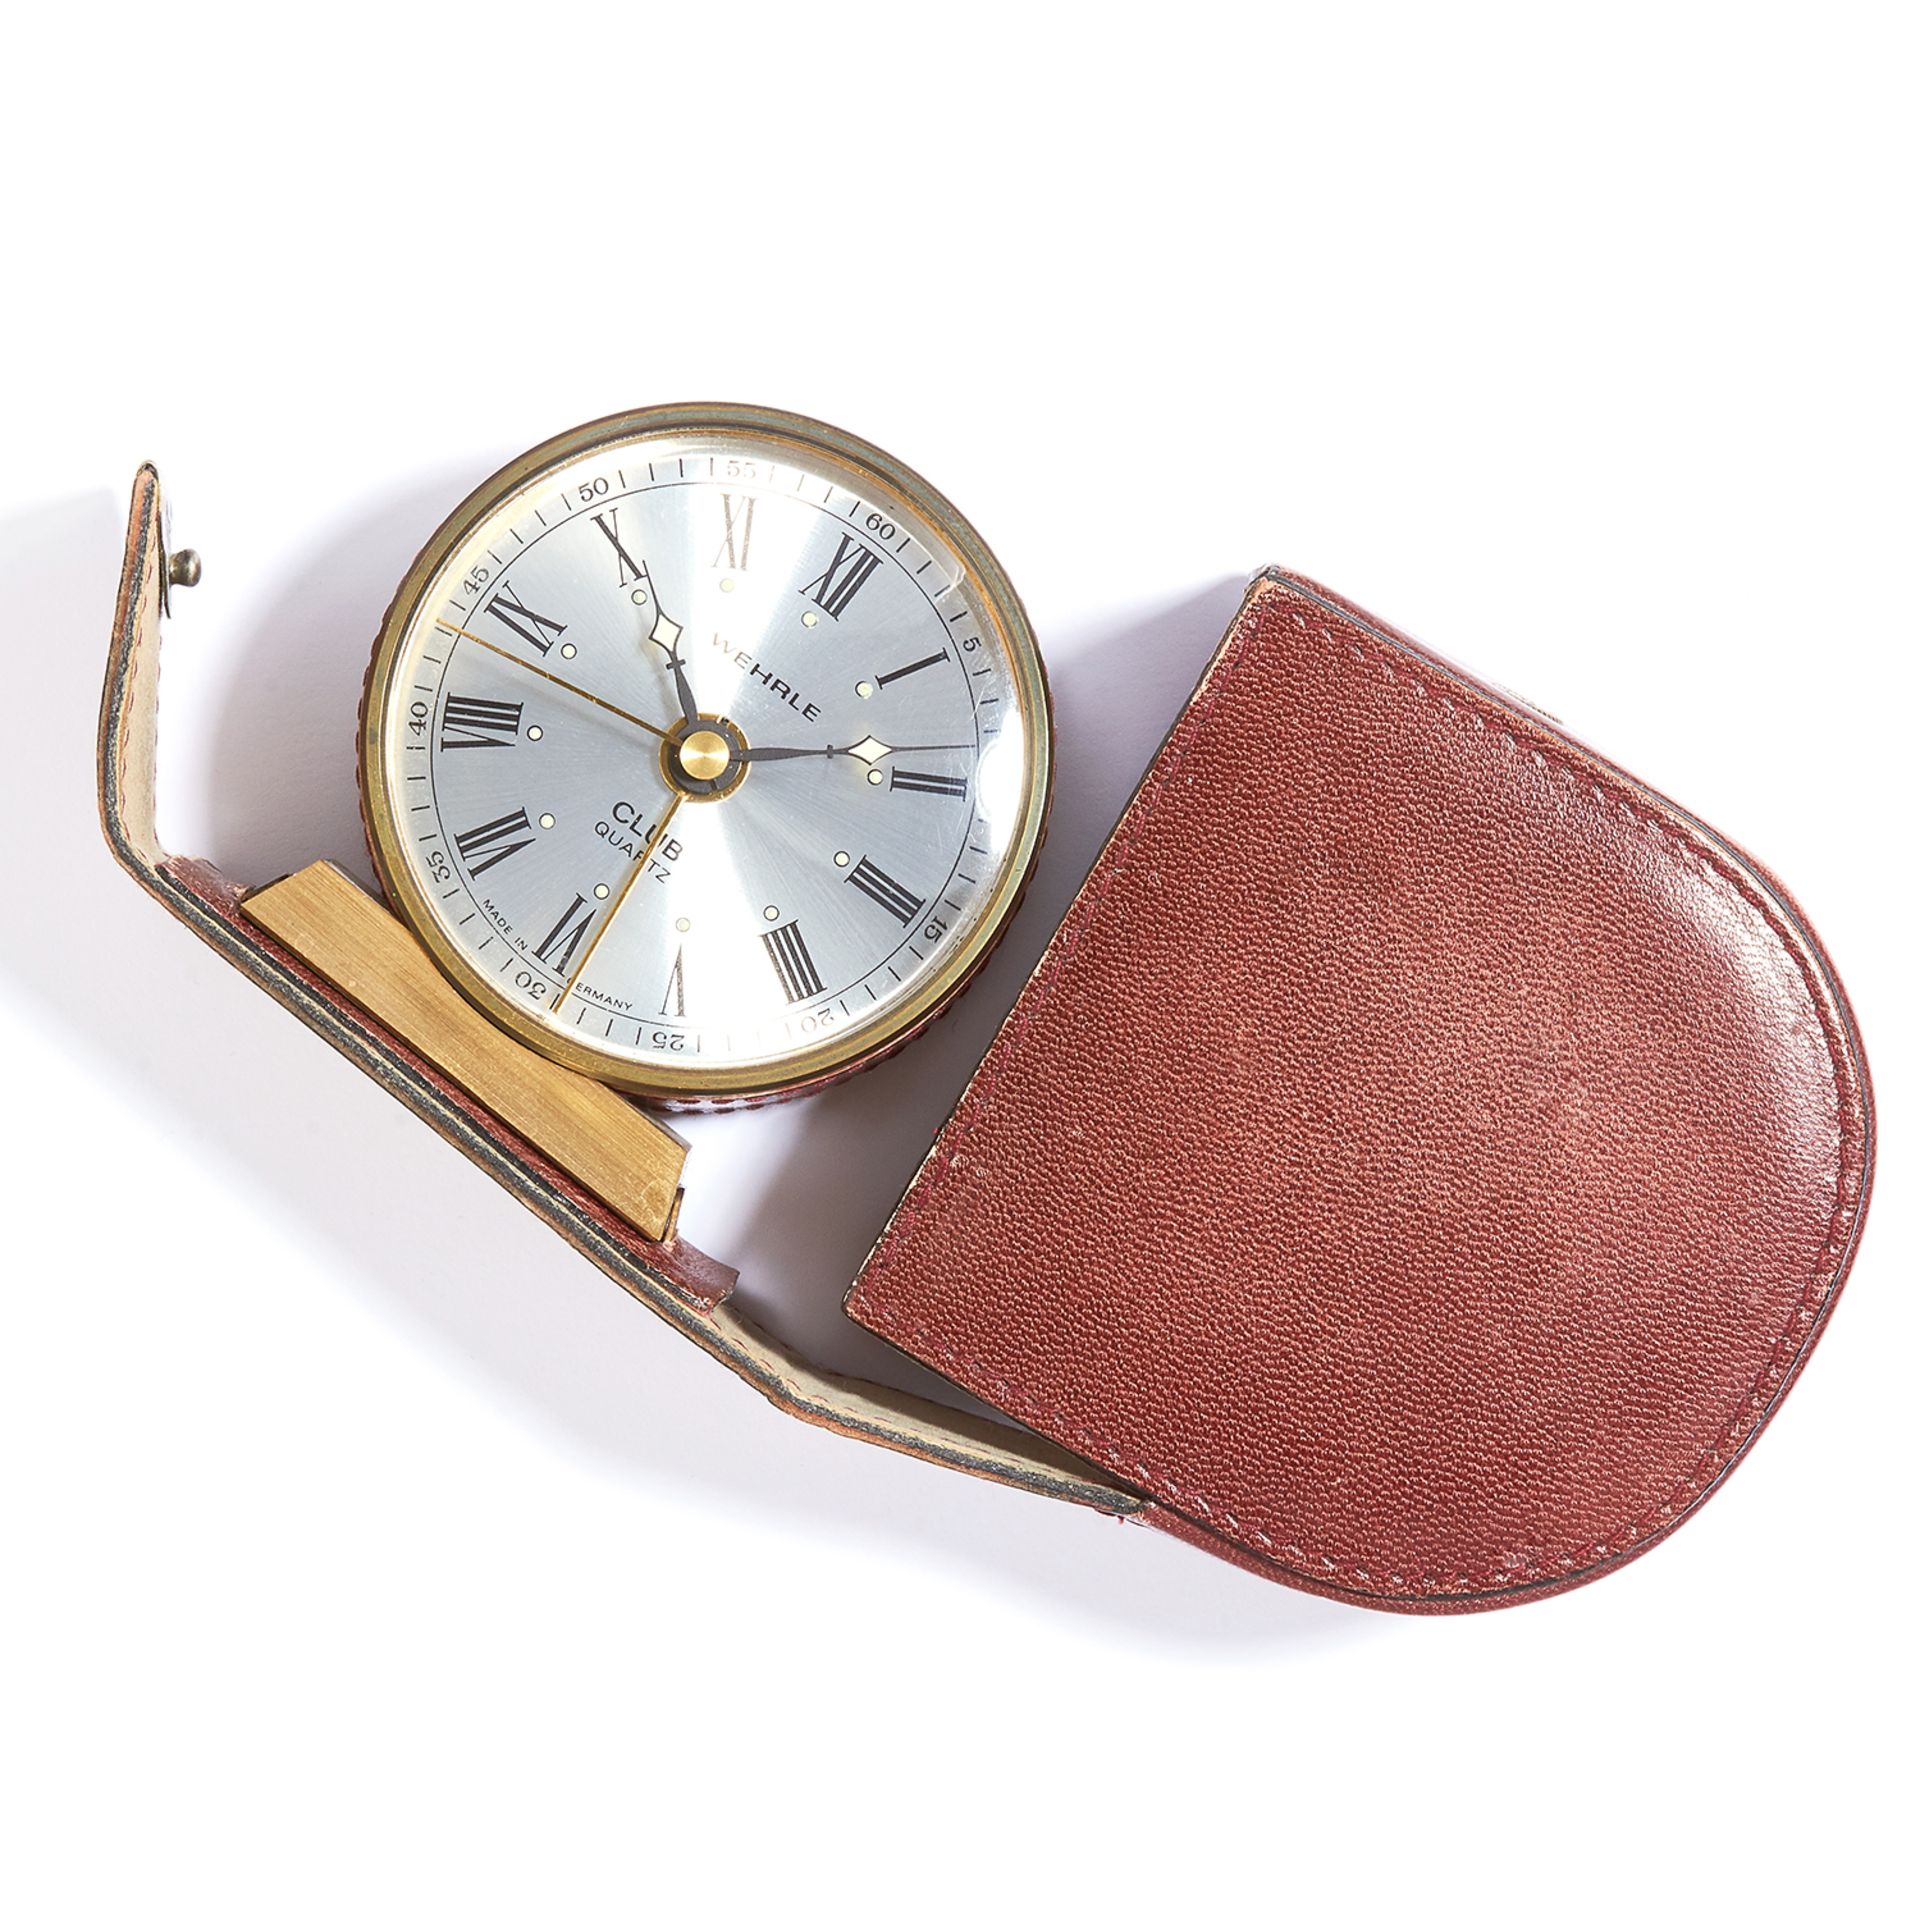 ALARM CLOCK, WEHRLE with quartz movement, in brown leather case, 235.3g. - Bild 2 aus 2